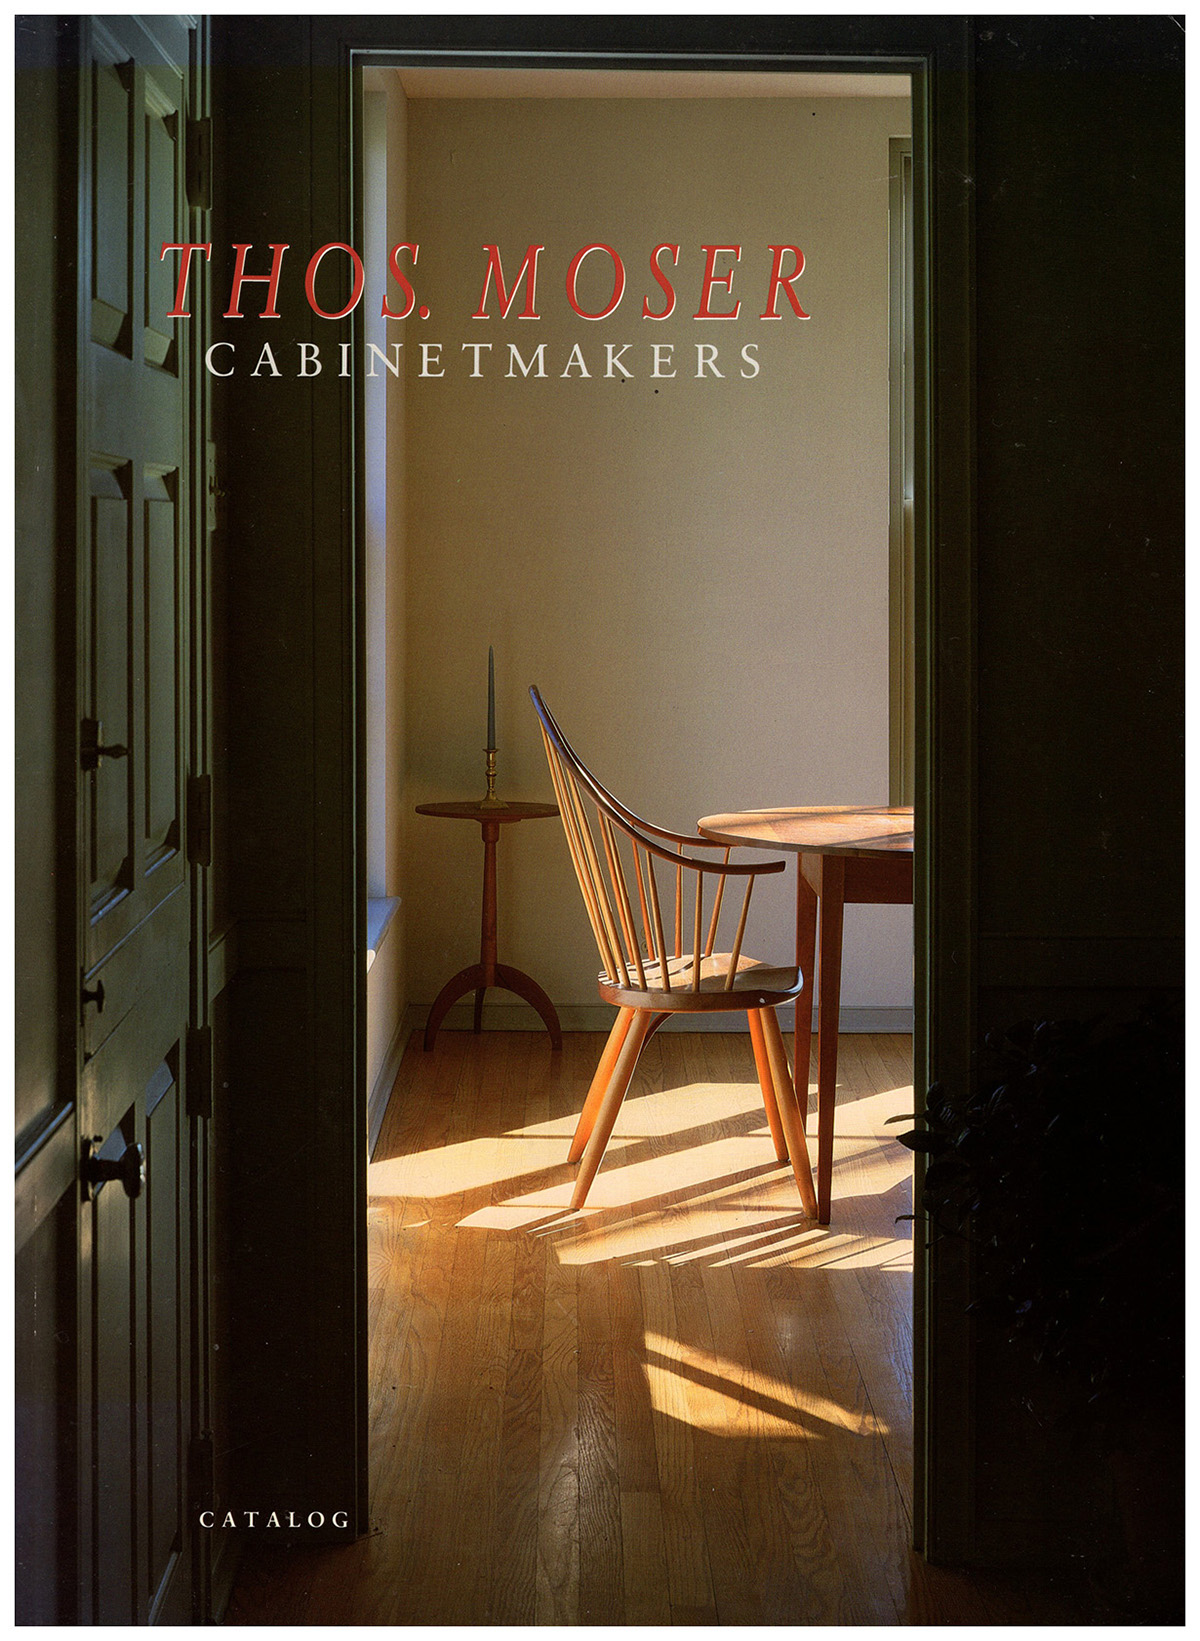 Thos. Moser Cabinetmakers - Thos. Moser: Cabinetmakers Catalog 1990 (with Price List)